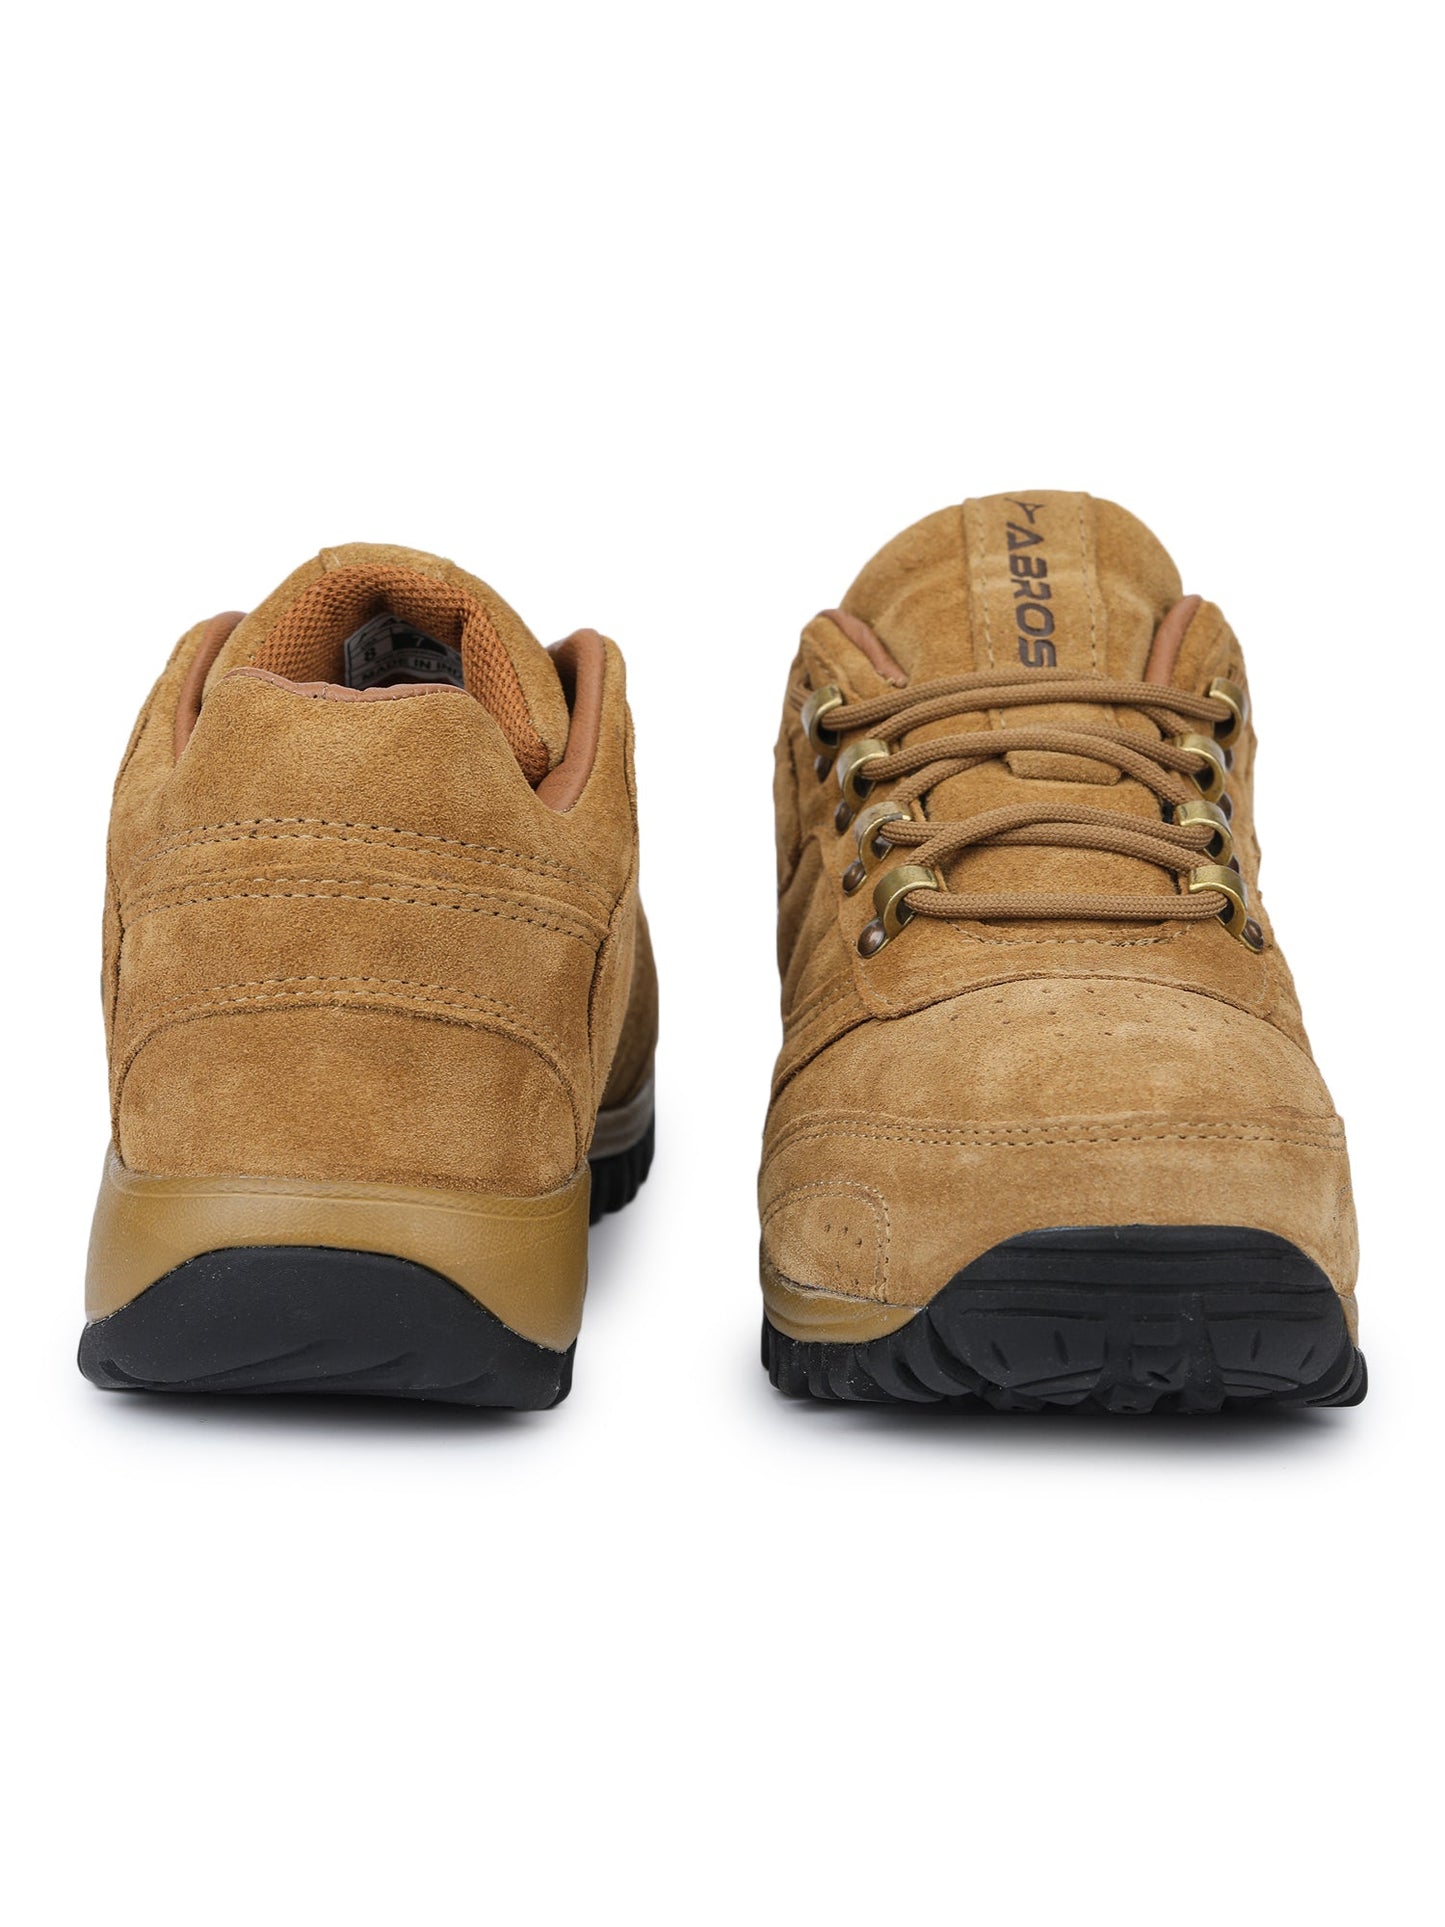 Eberto Outdoor-Shoes For Men's